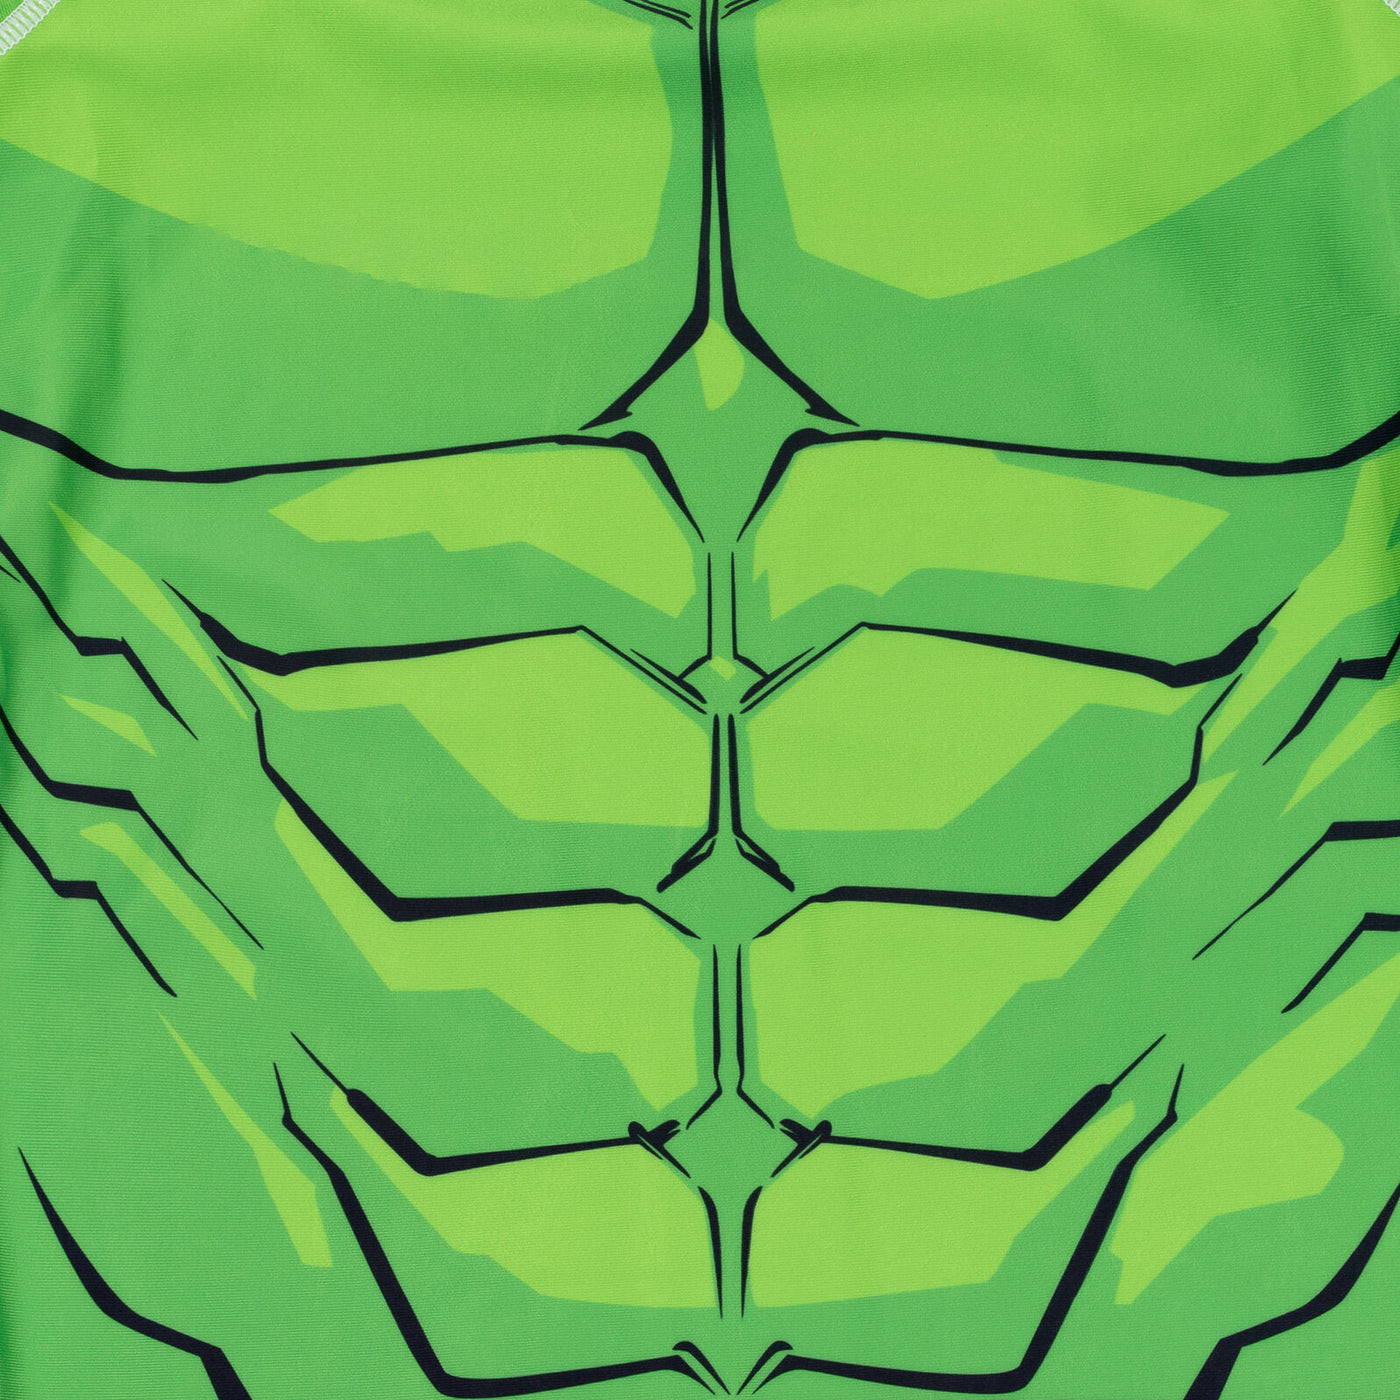 Marvel Avengers The Hulk UPF 50+ Rash Guard Swim Shirt